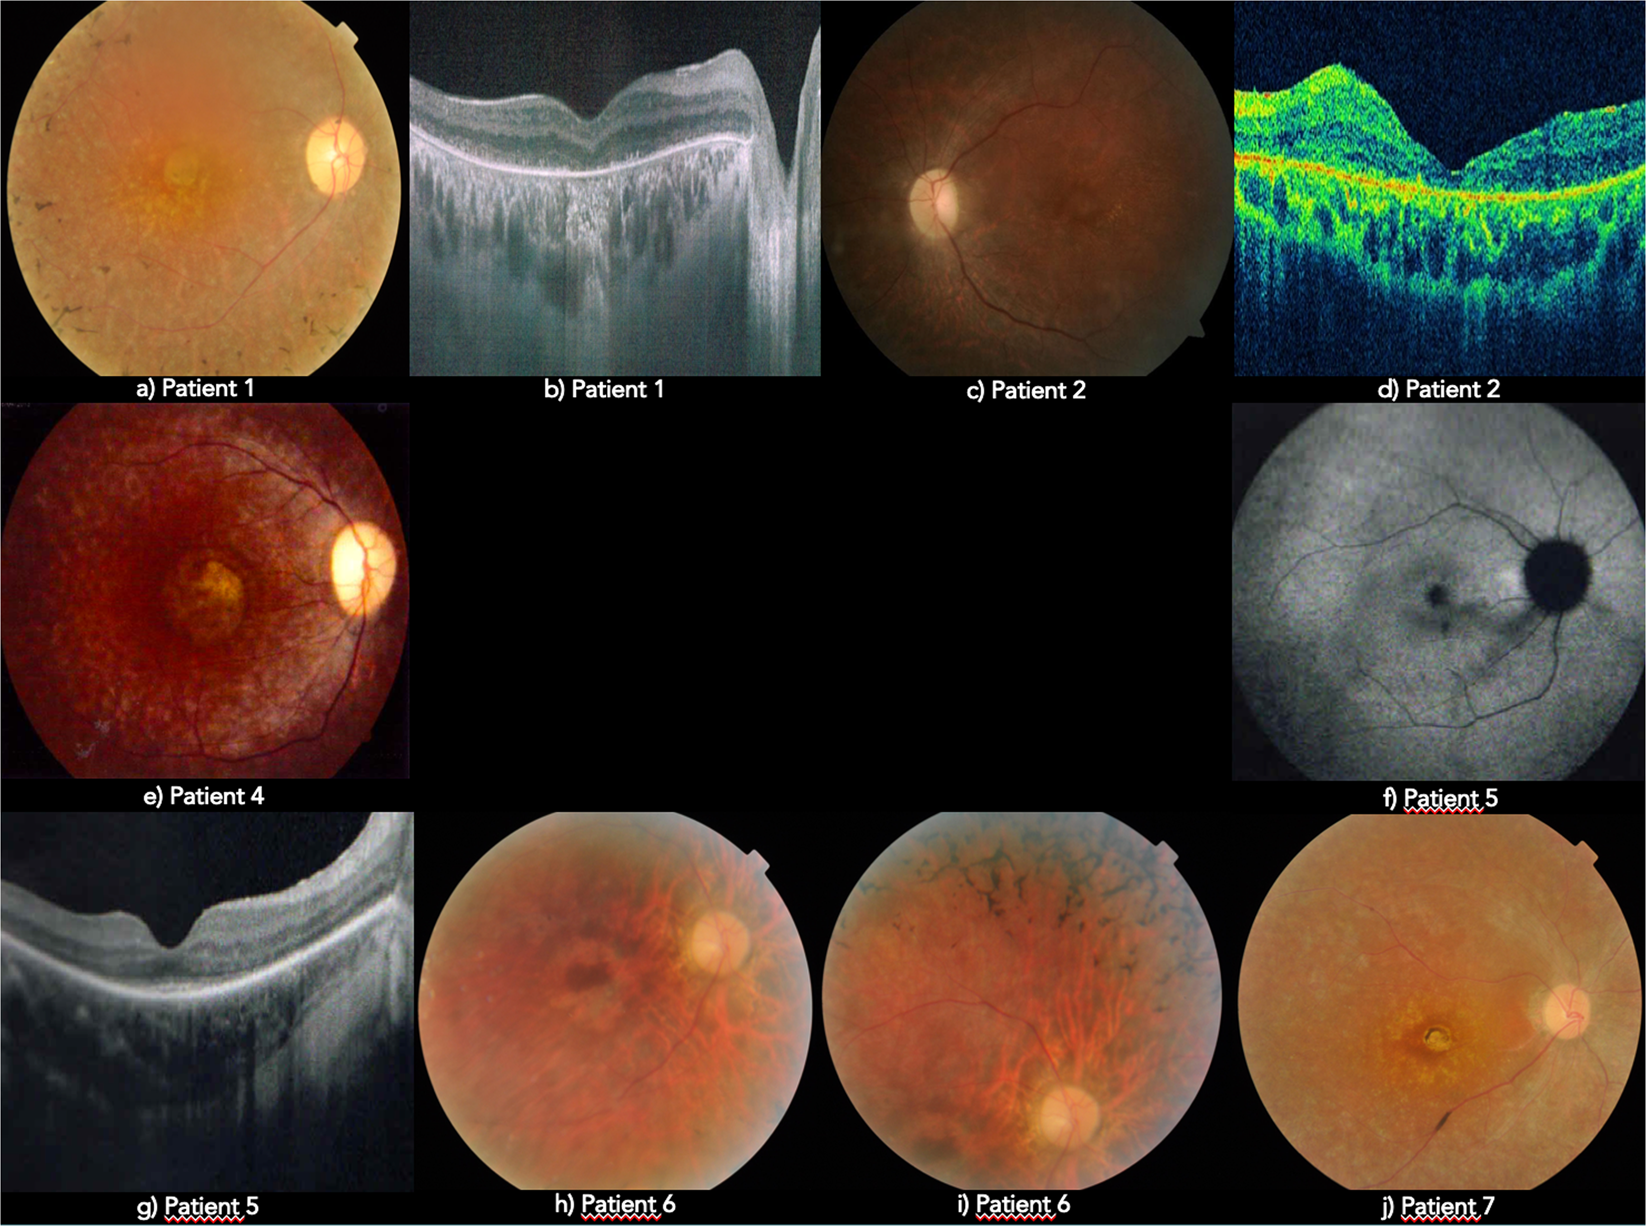 people with retinitis pigmentosa